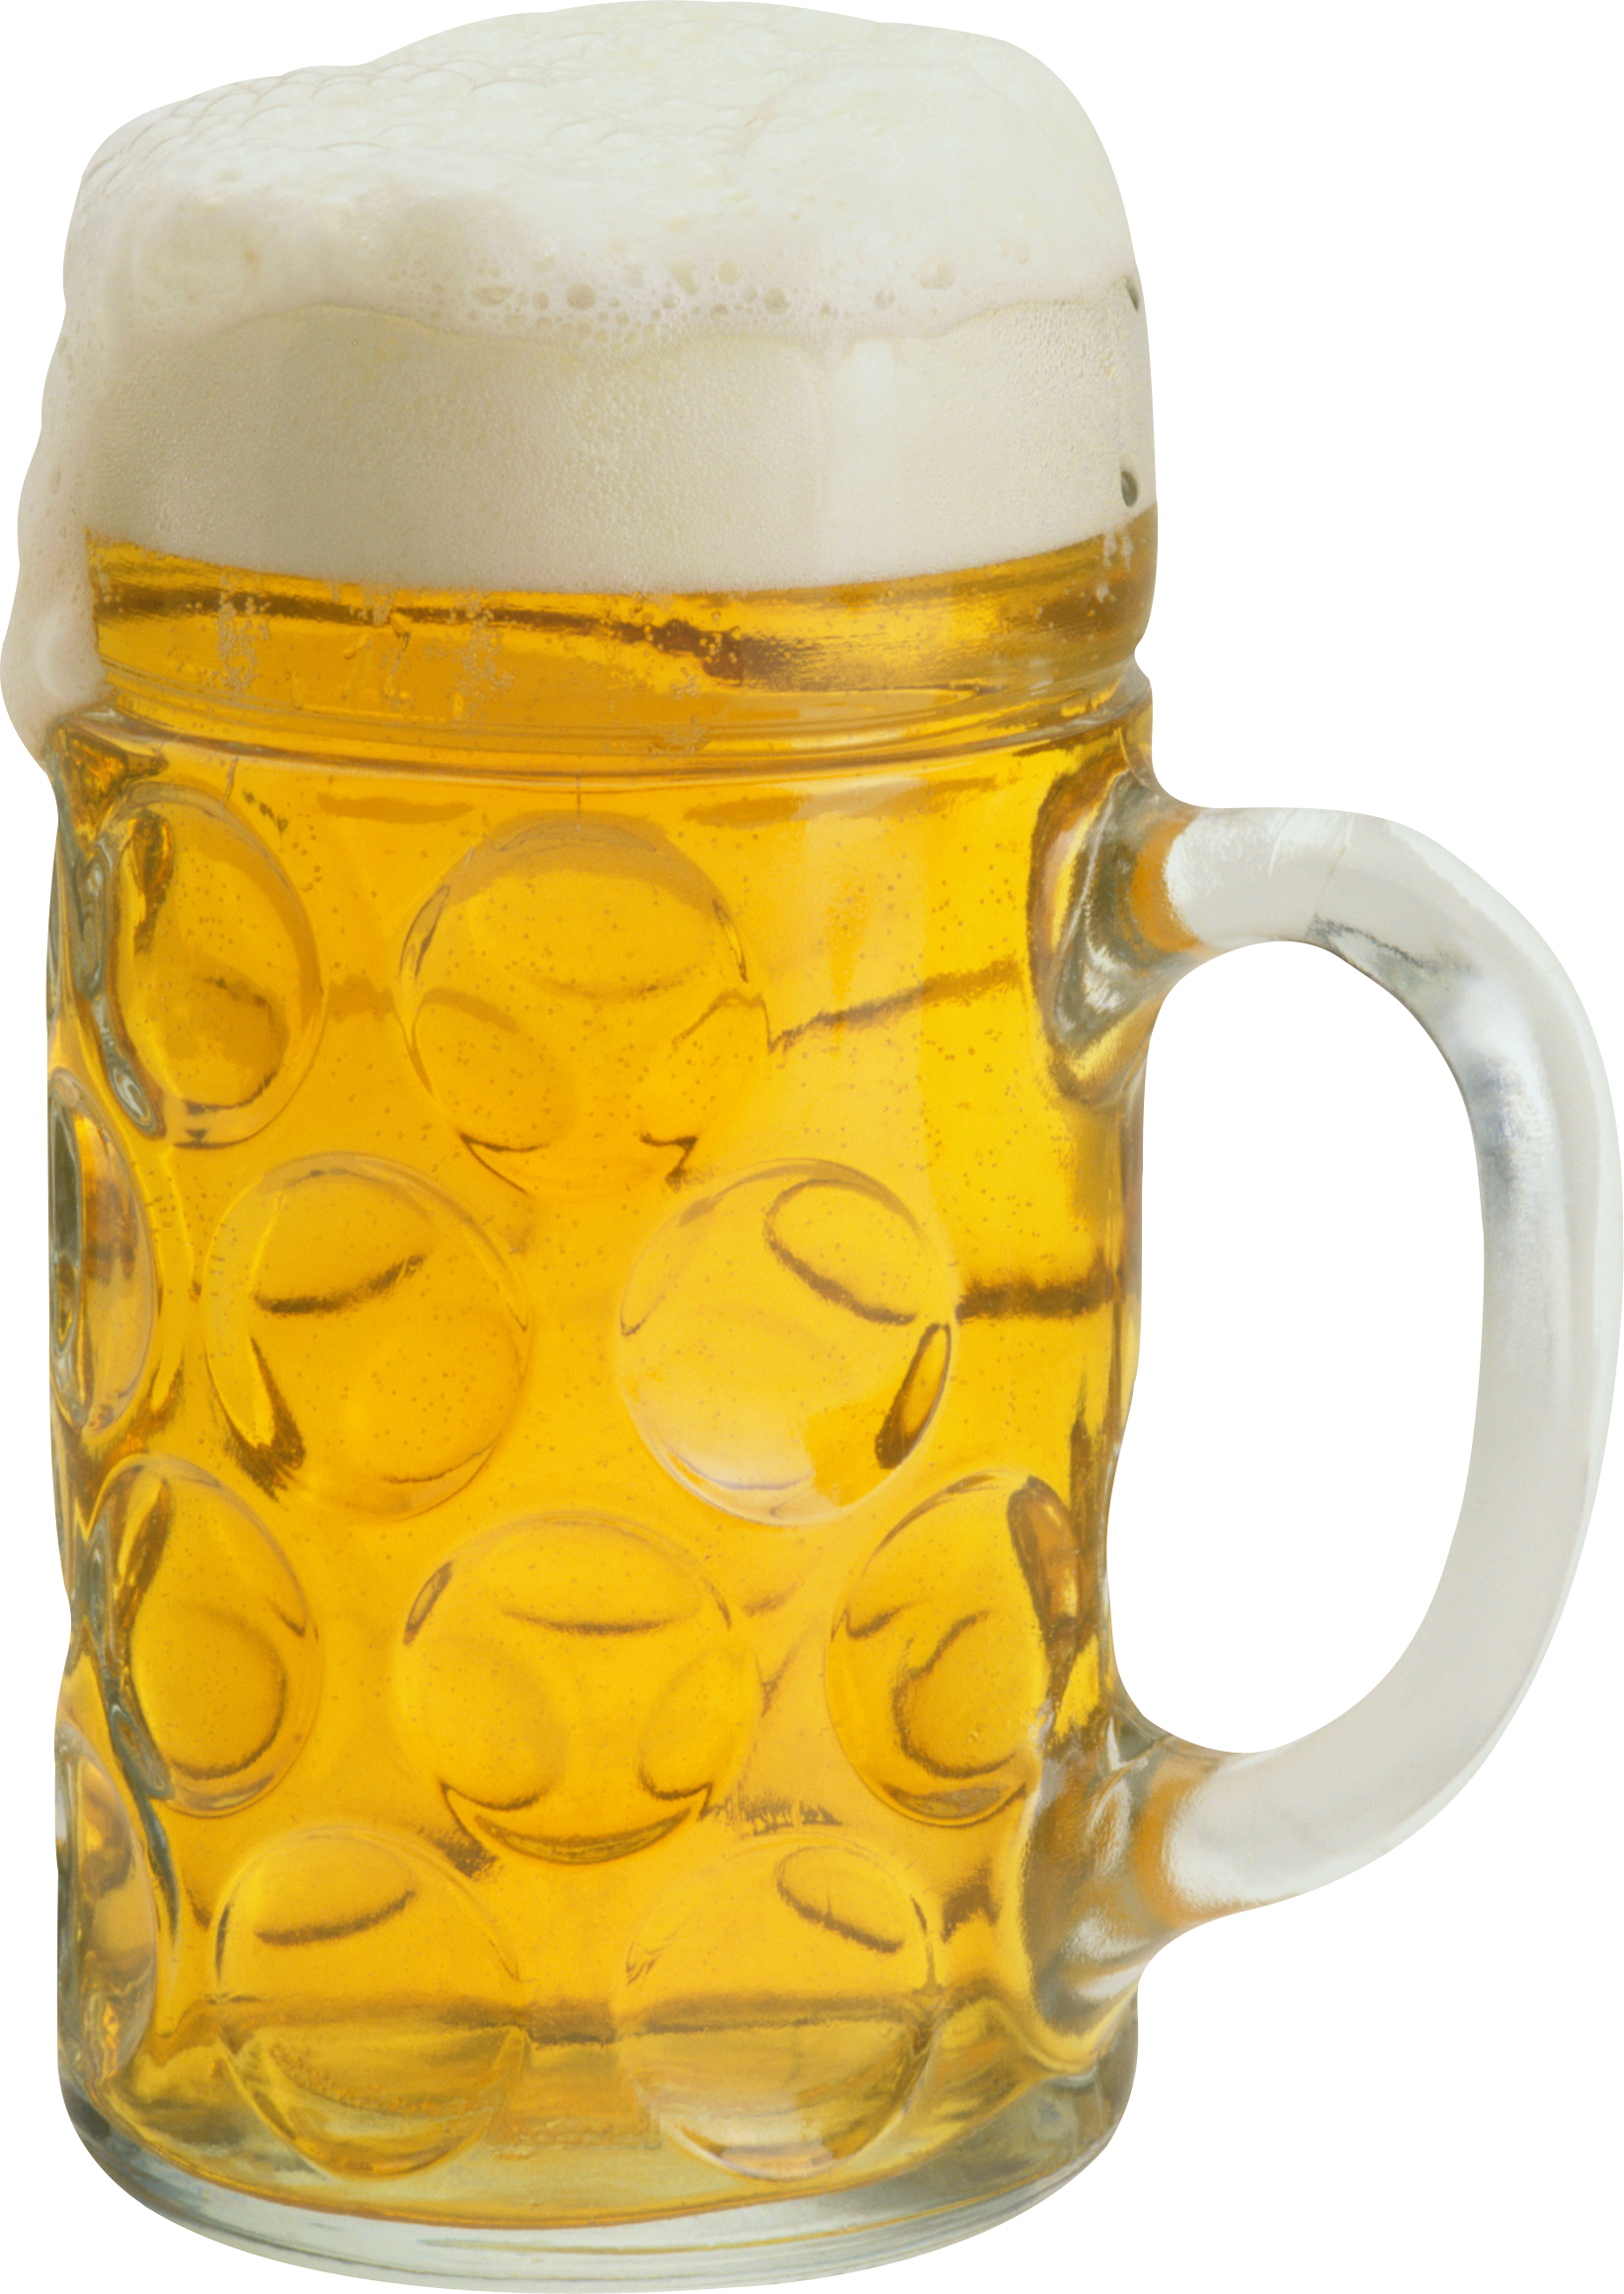 Pint Beer Png Image - Beer Mug, Transparent background PNG HD thumbnail